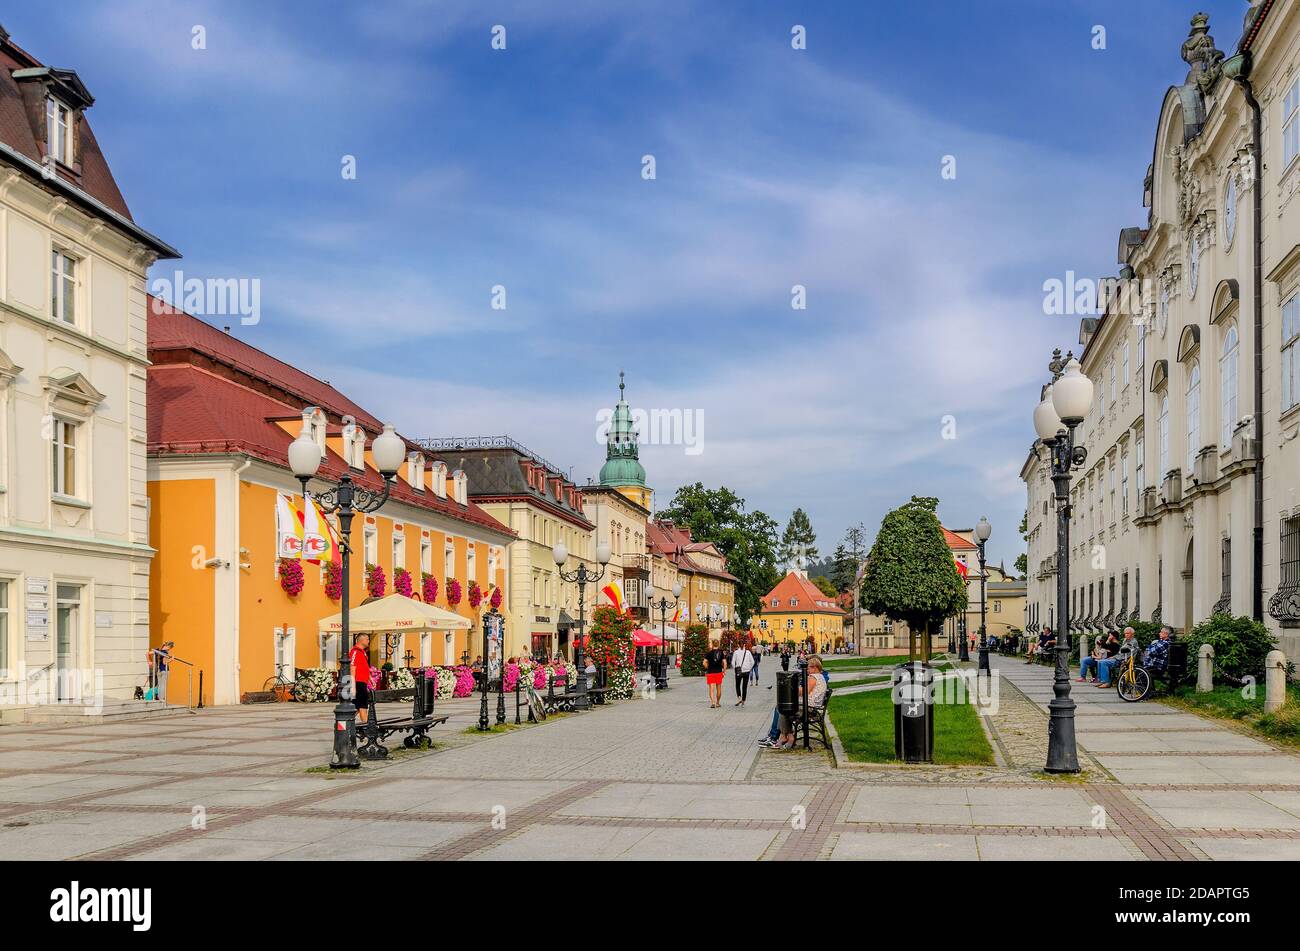 Plac Piastowski, main street of Cieplice Slaskie-Zdroj, Schaffgotsch palace. City of Jelenia Gora, (ger.: Hirschberg im Riesengebirge), Poland. Stock Photo